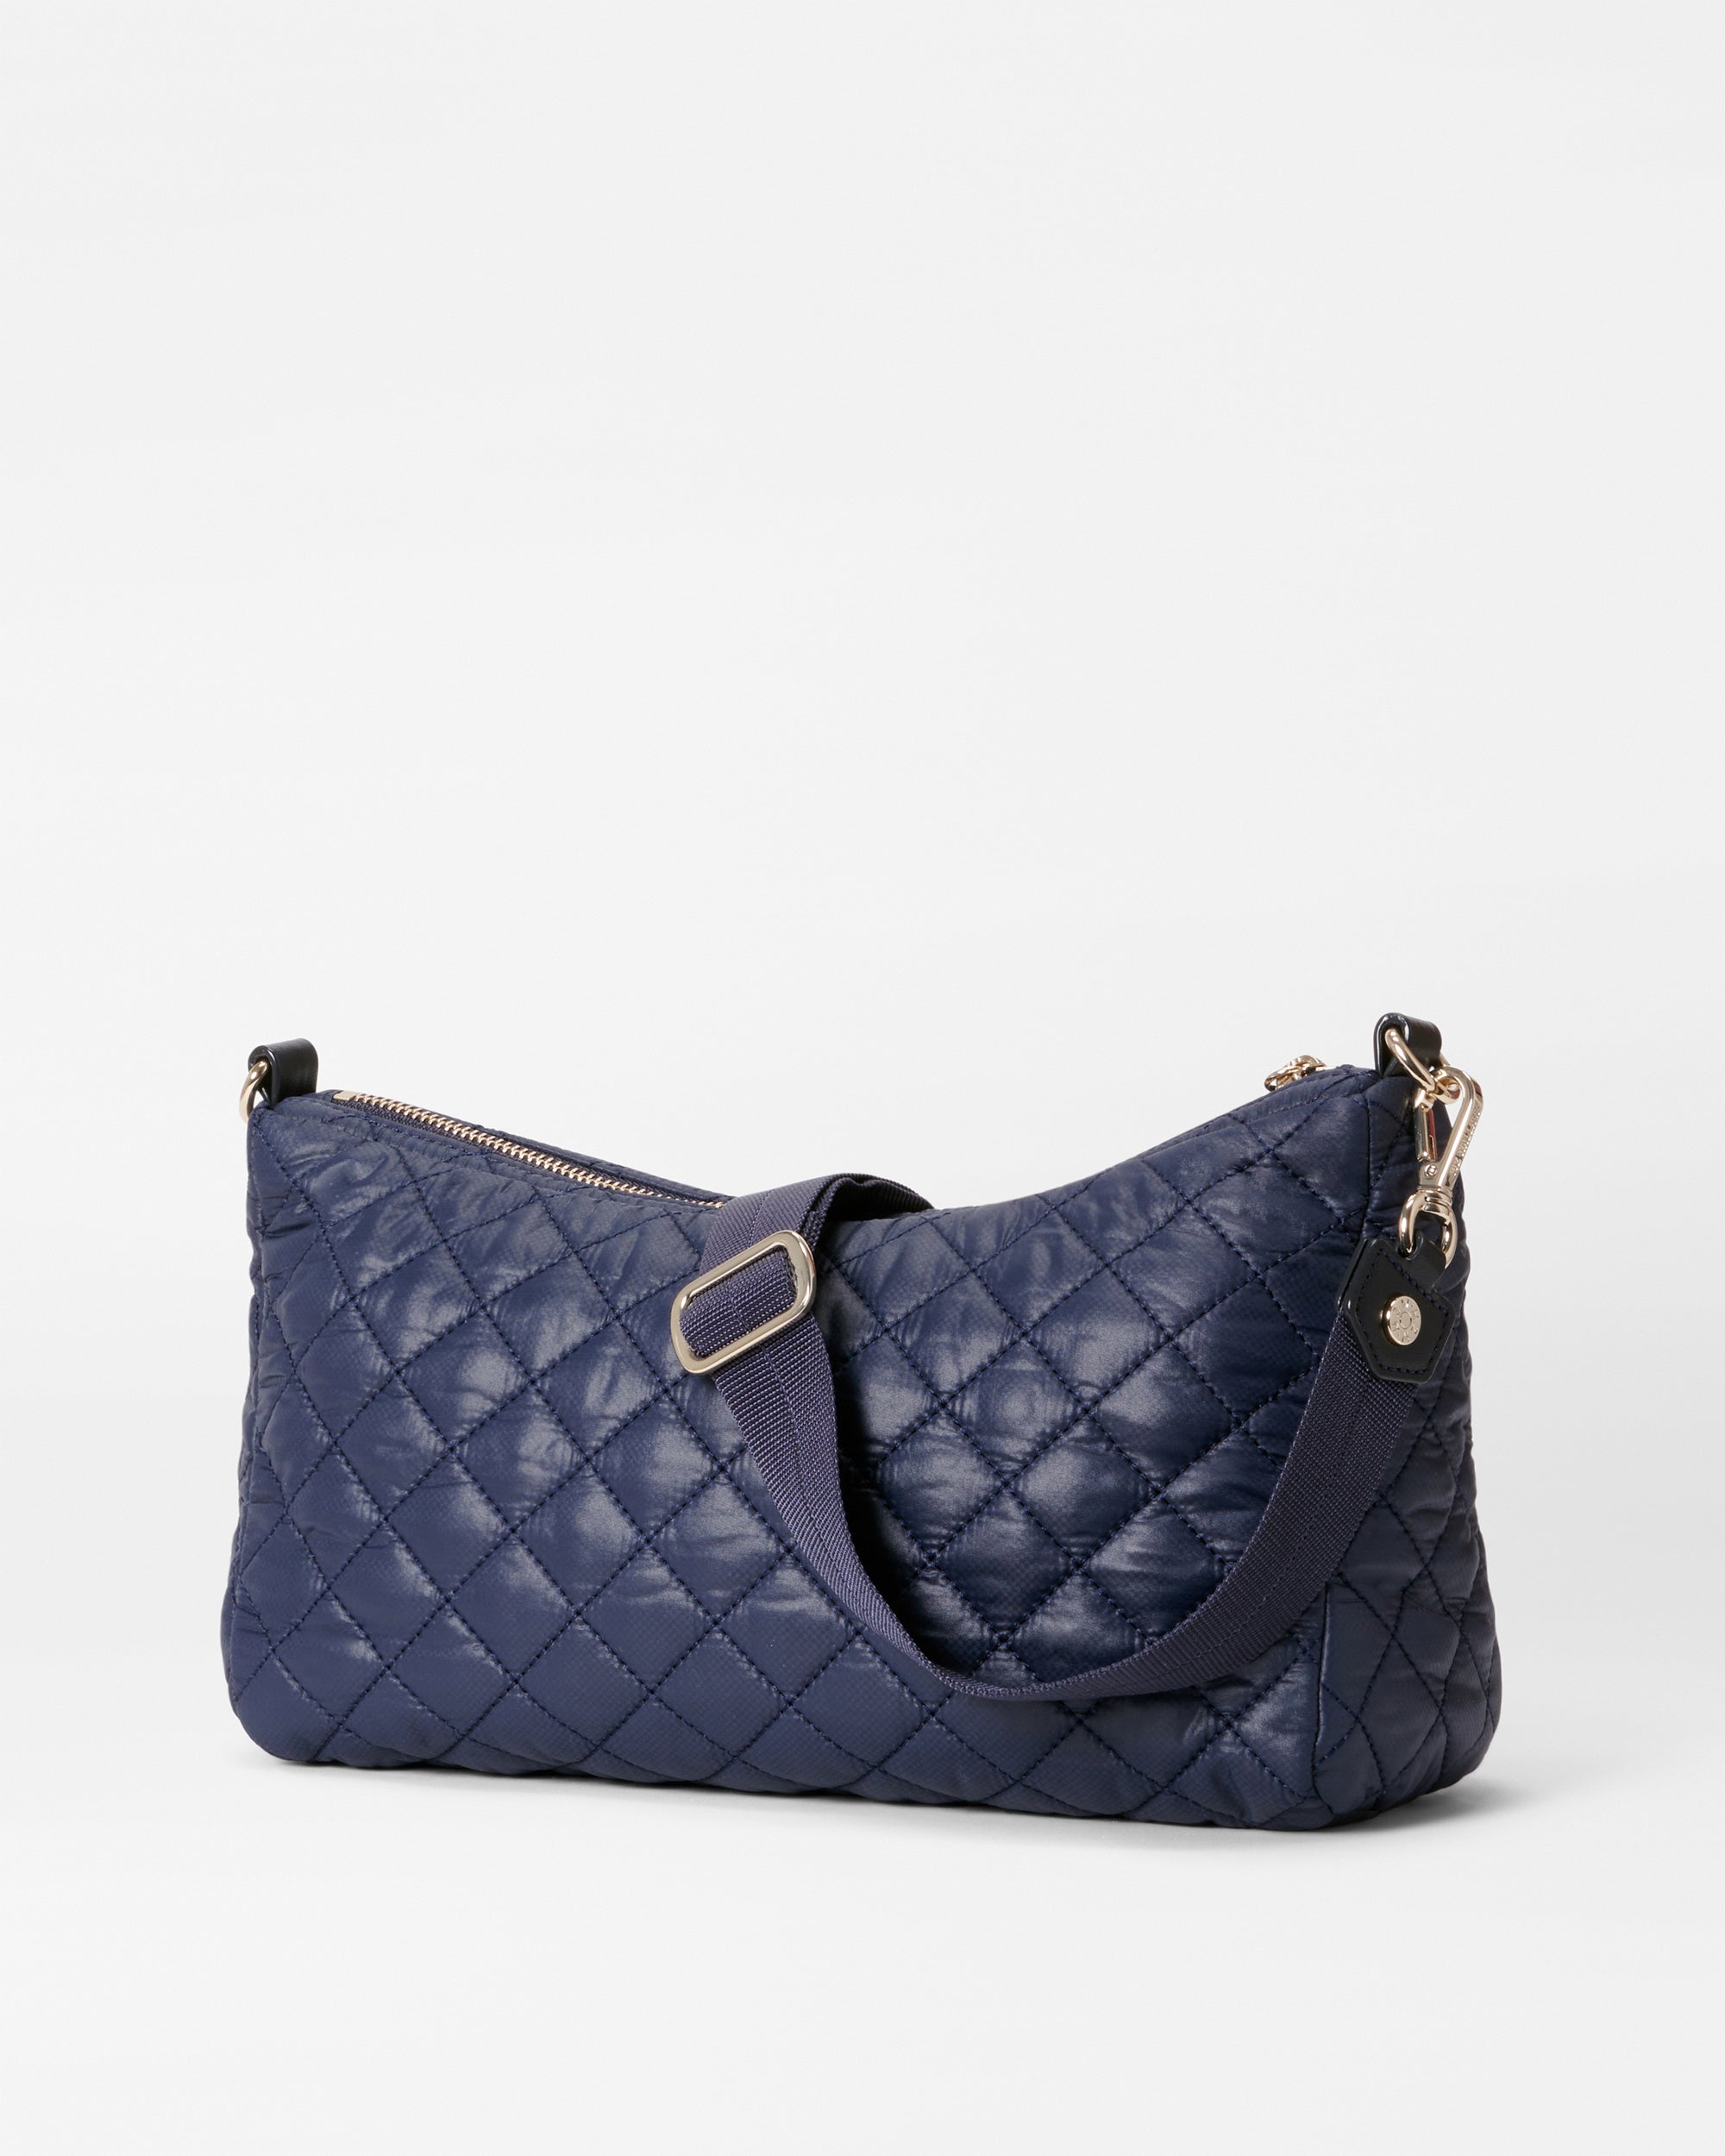 Refinish Royal Blue Chanel Bag